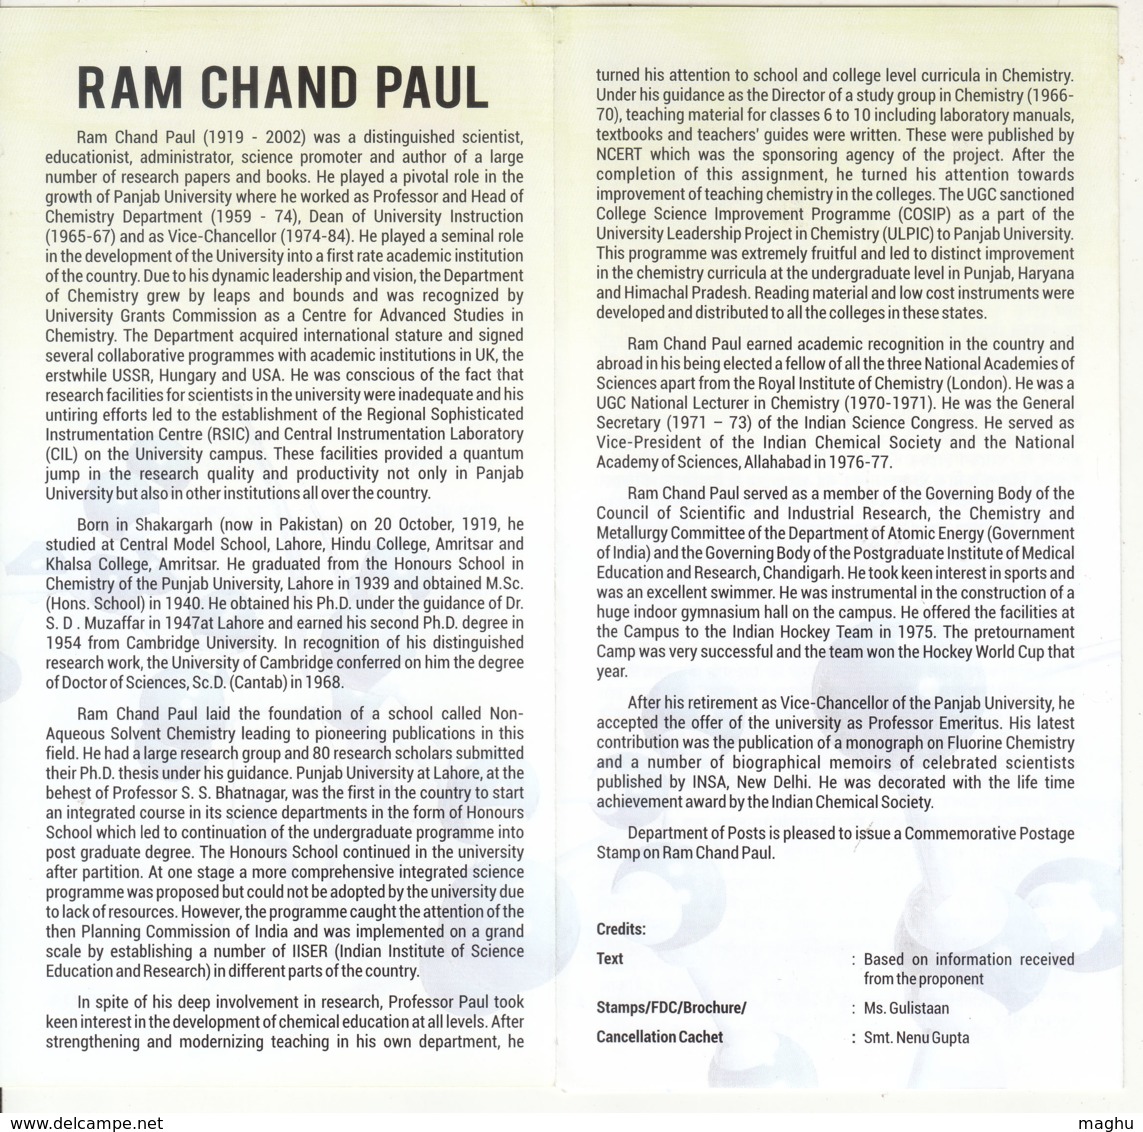 Stamped Info., Prof., Ram Chandra Paul 2019, Chemistry Symbols, Science, Atomic Energy, Gymnasium, Swimming, Hockey - Chemistry